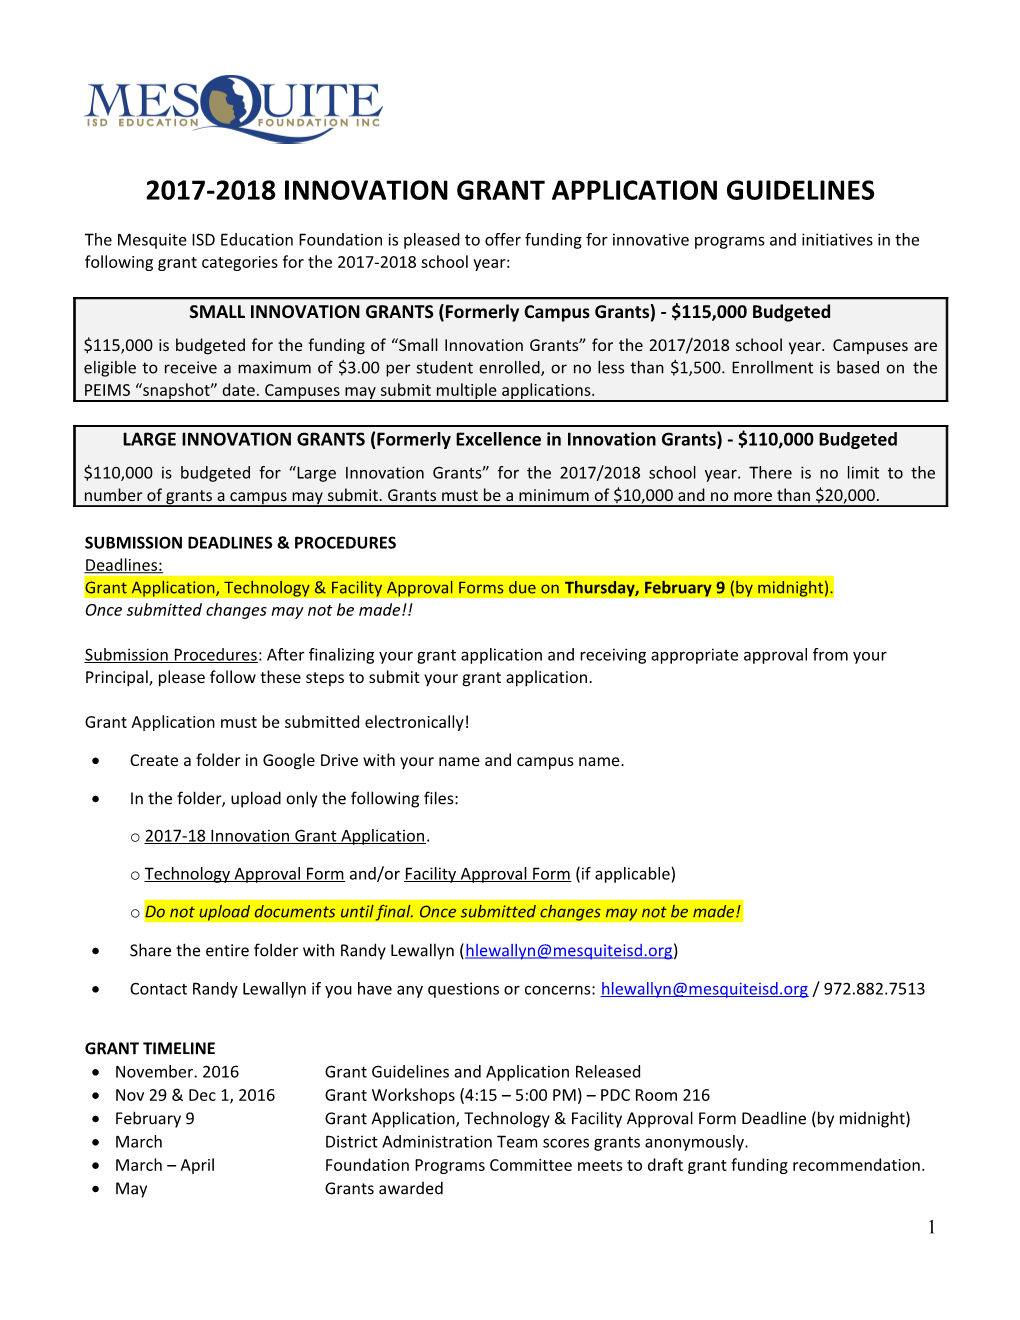 2017-2018 Innovationgrant Application Guidelines